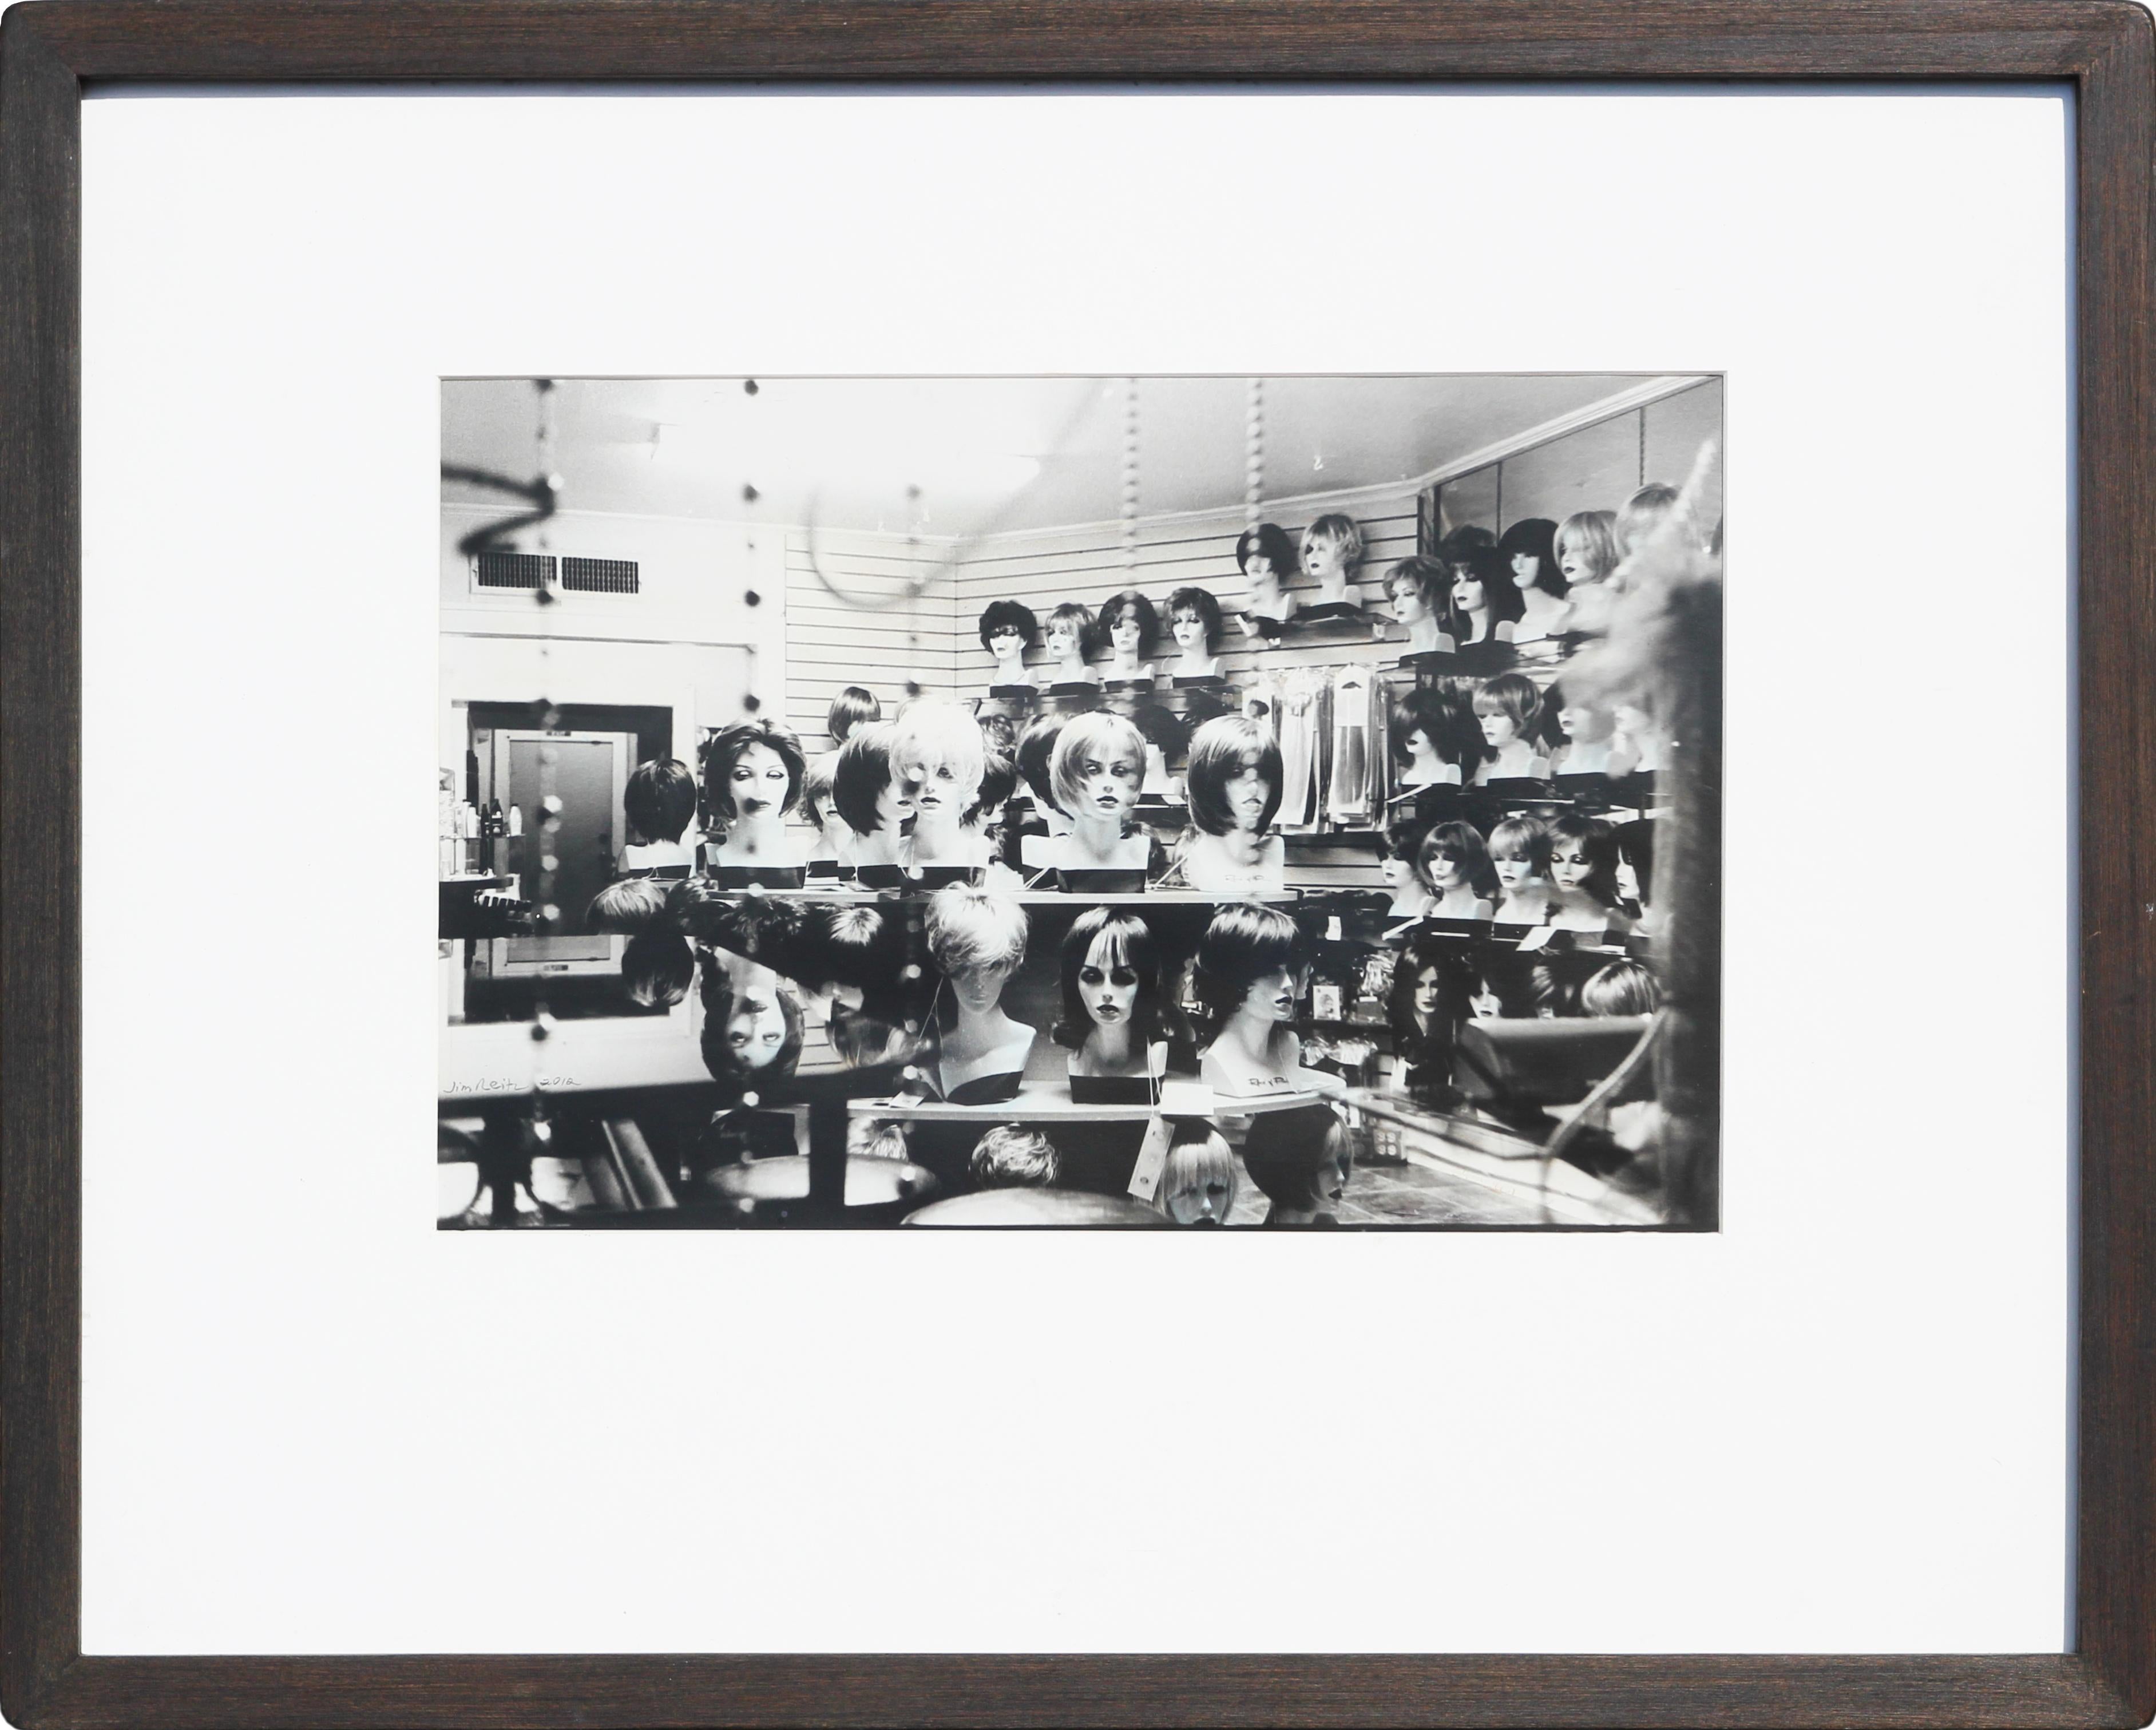 Jim Reitz Still-Life Photograph - Contemporary Black and White Still Life Photograph of a Wig Shop